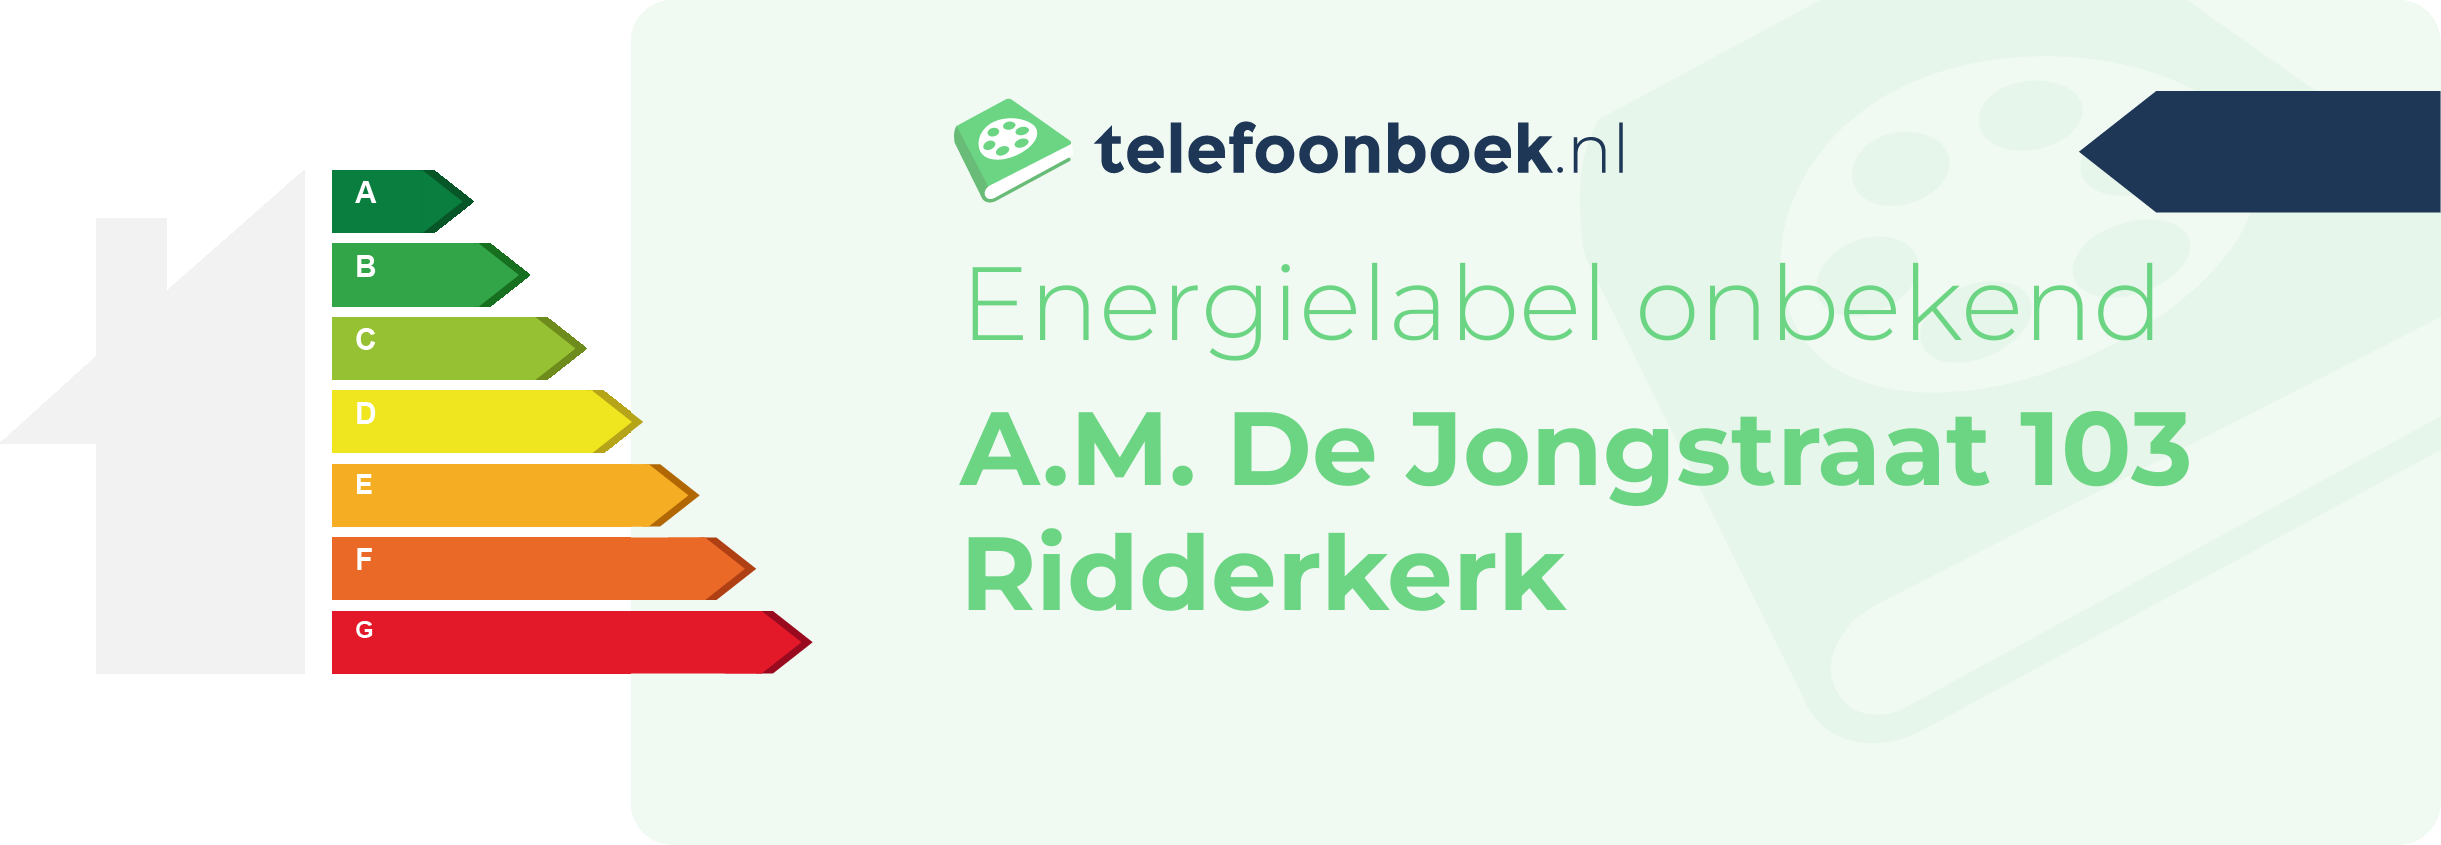 Energielabel A.M. De Jongstraat 103 Ridderkerk